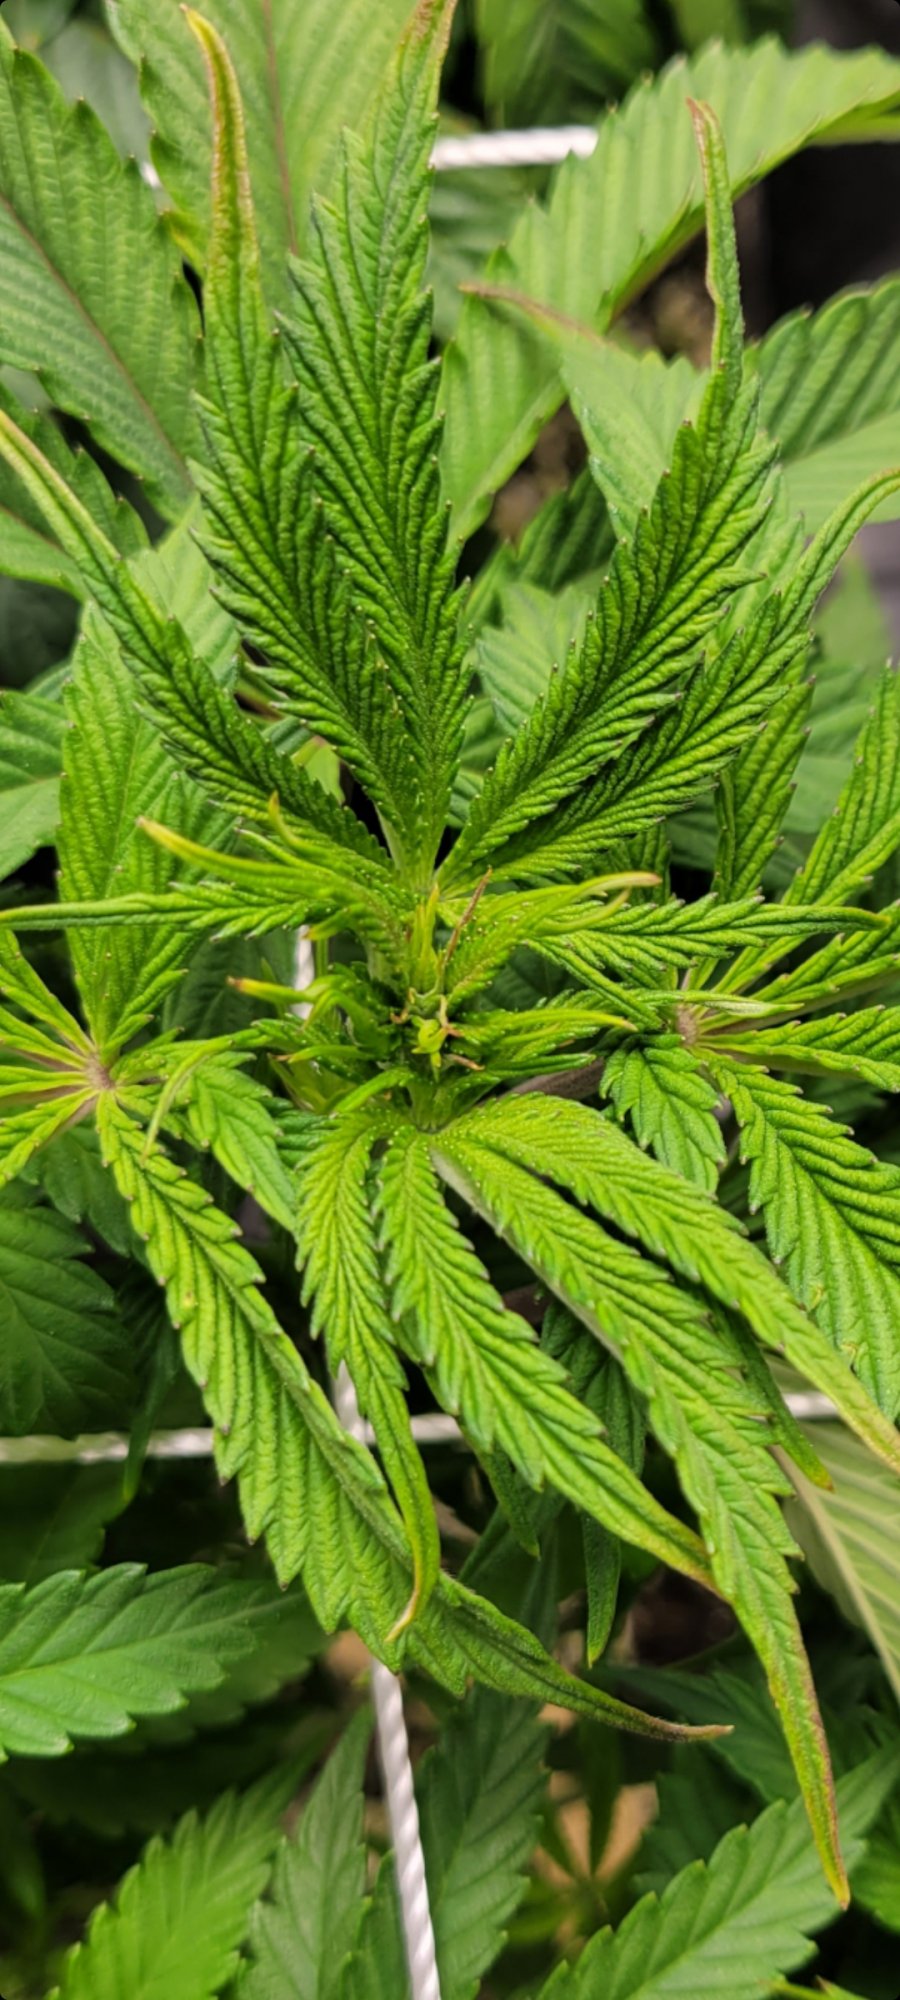 Purpleyellow leaf tips on new growth